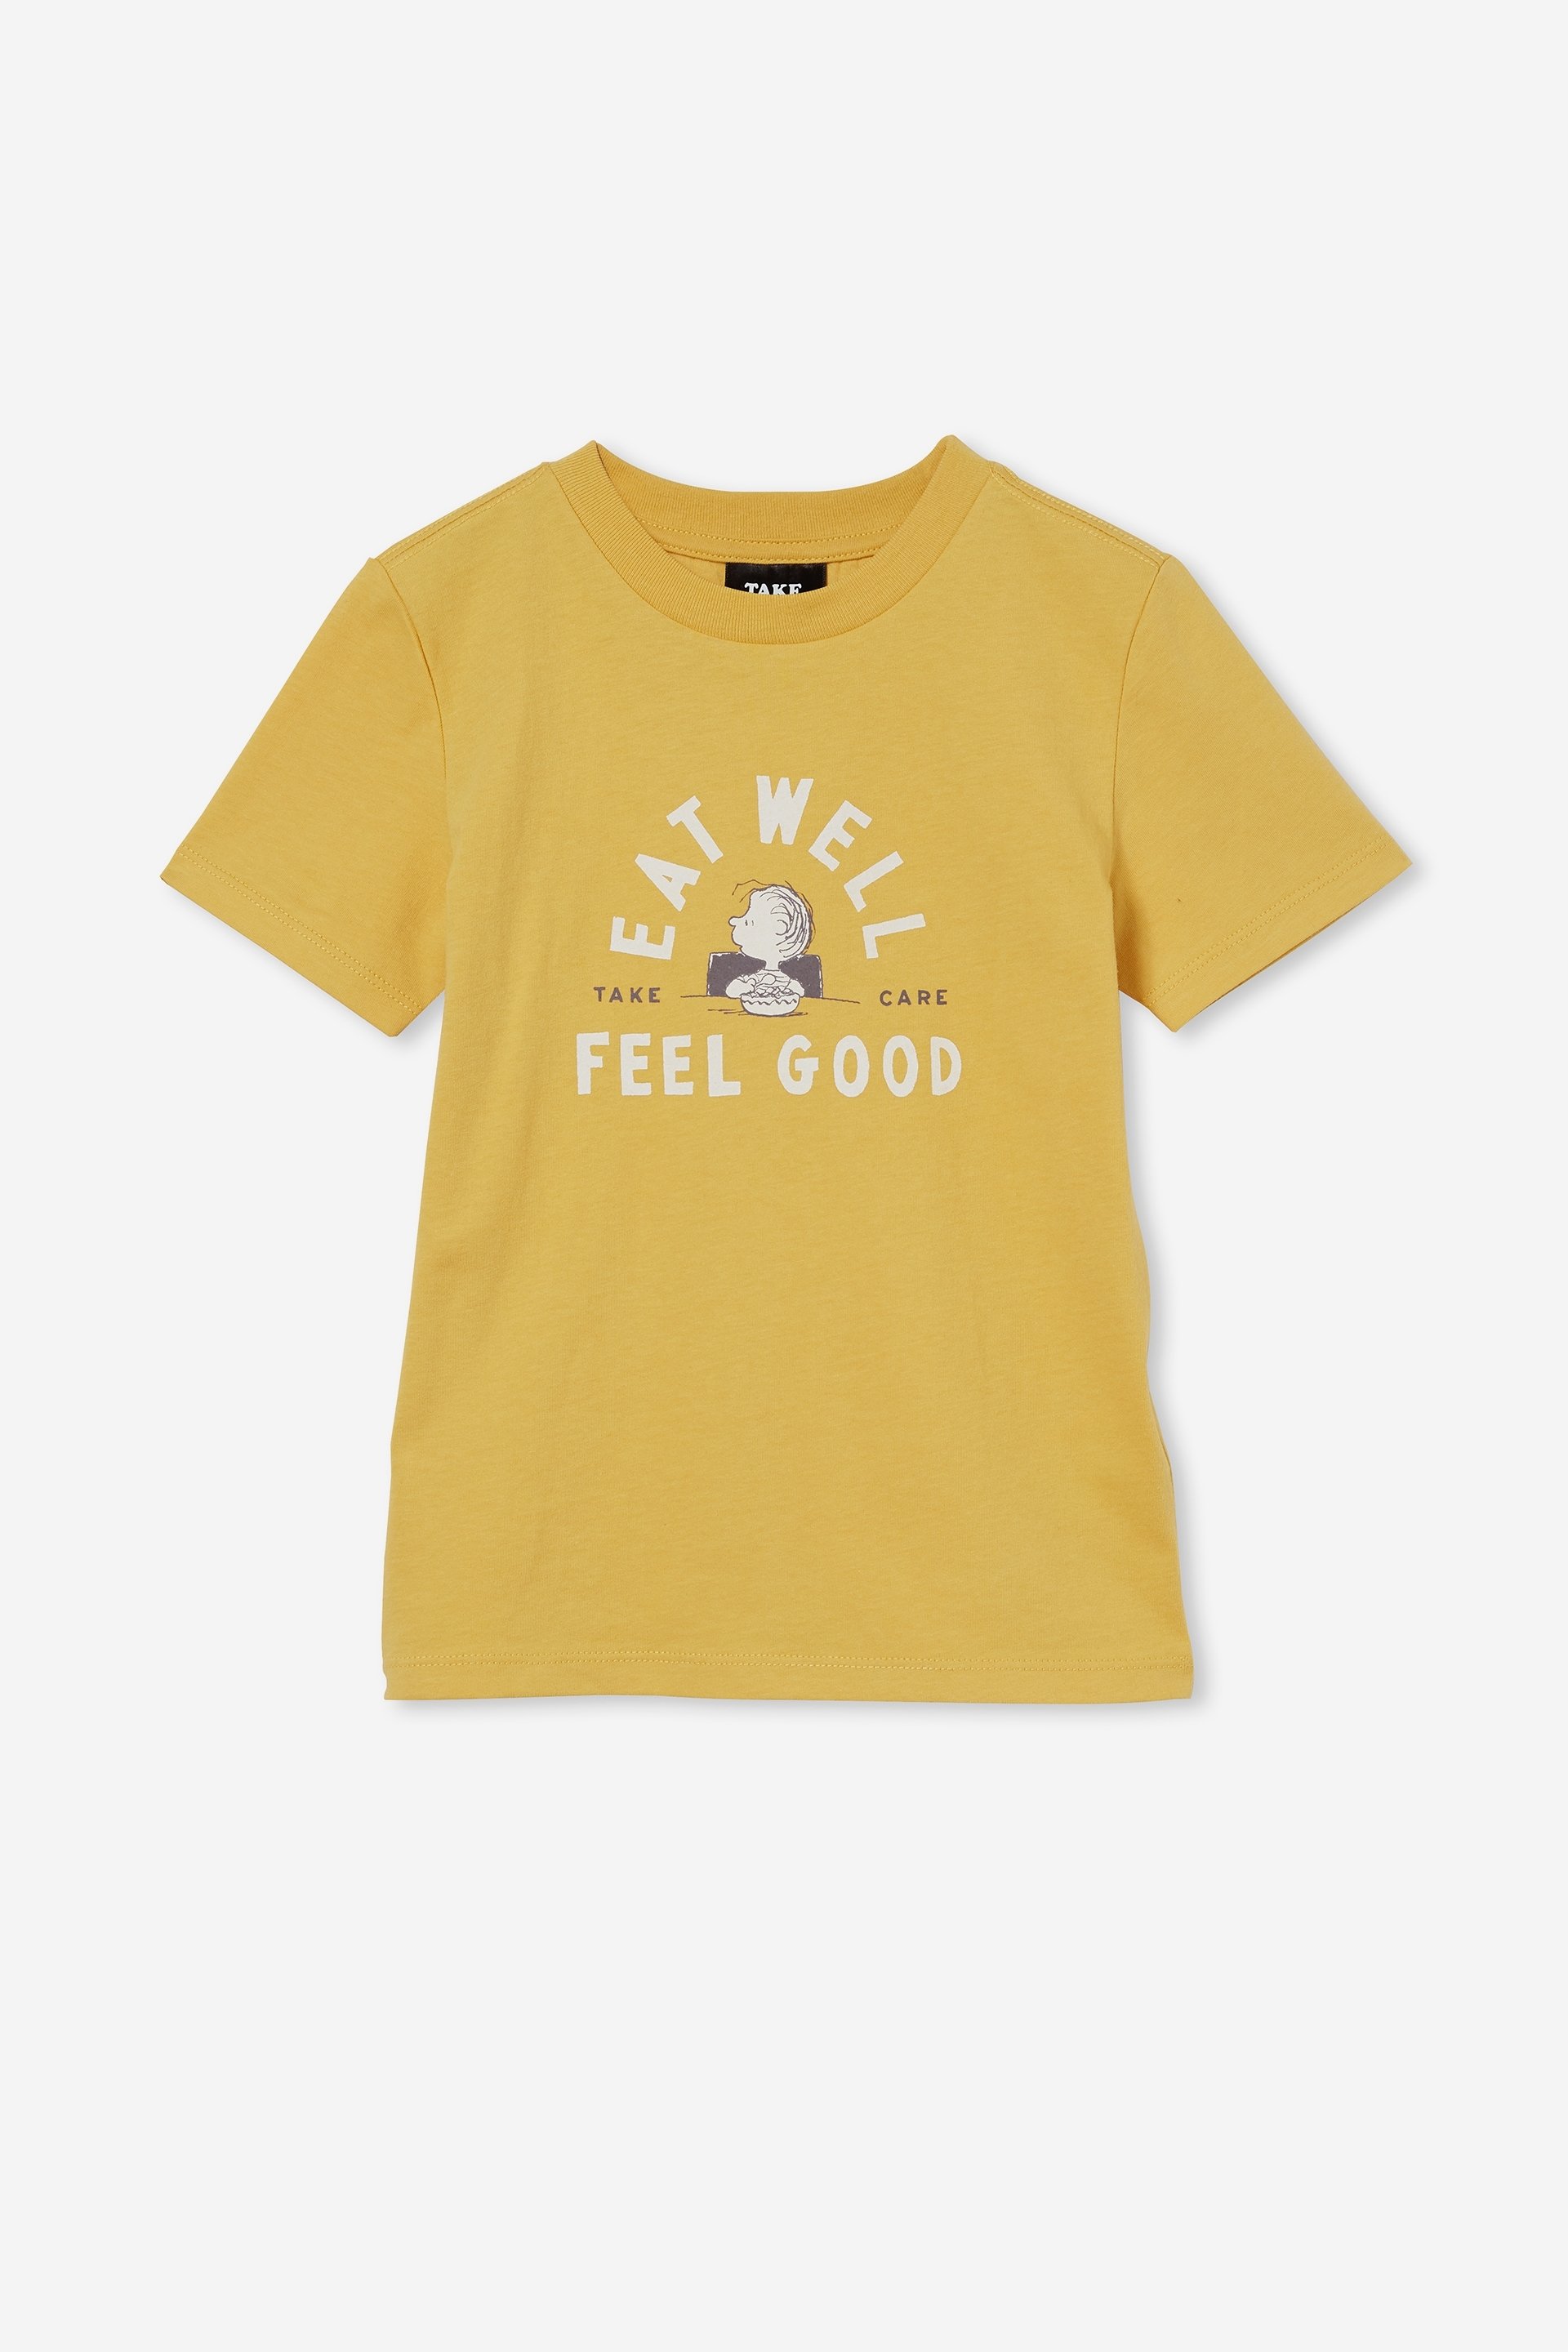 Cotton On Kids - Co-Lab Short Sleeve Tee - Lcn pea honey gold / eat well feel good